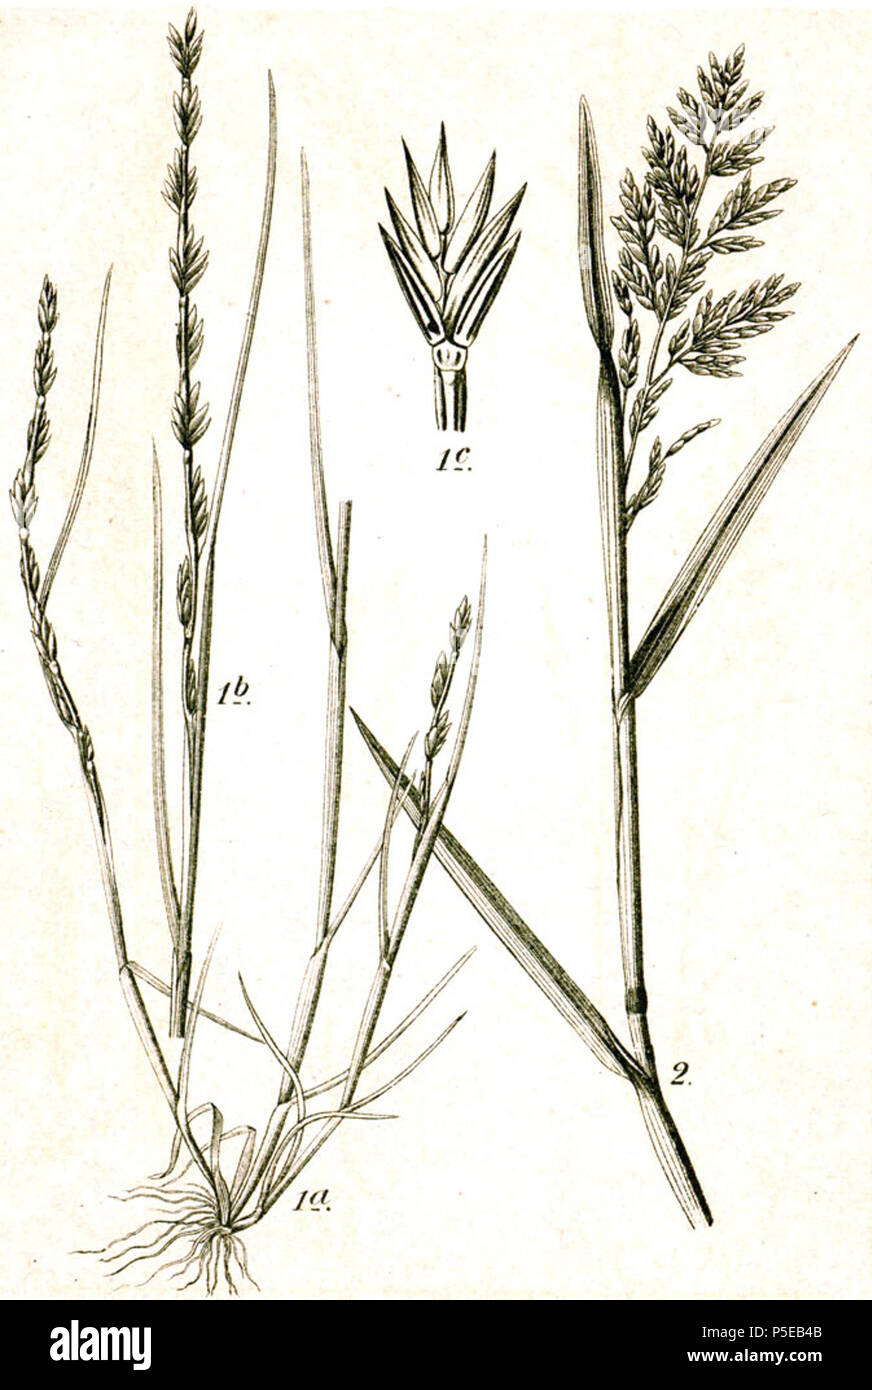 N/A. 1. Micropyrum tenellum (L.) Link f. tenellum, syn. Festuca lachenalii (J.F.Gmel.) Spenn. 2. Puccinellia rupestris (With.) Fernald & Weath., syn. Pseudosclerochloa rupestris (With.) Tzvelev, Festuca procumbens (Curtis) Kunth, nom. ill. Original Caption 1. Einfacher Schwingel, Festuca lachenalii Spenn. 2. Liegender Schwingel, F. procumbens Kunth. . 1796. Johann Georg Sturm (Painter: Jacob Sturm) 554 Festuca spp Sturm40 Stock Photo